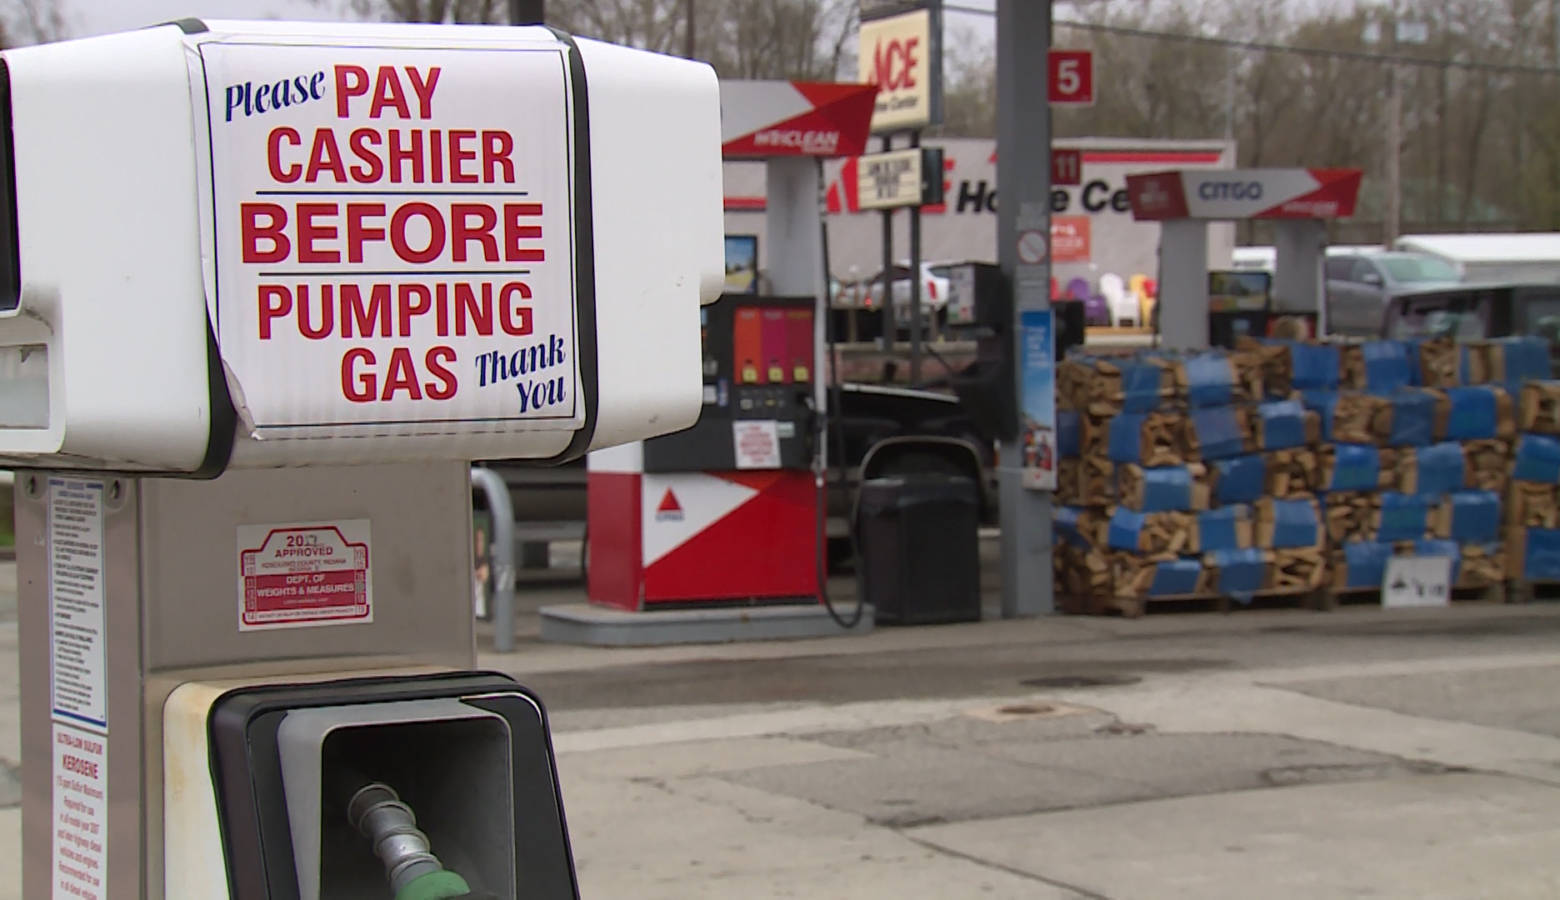 A pump at a Citgo station owned by Freedom Oil LLC. (Steve Burns/WTIU)